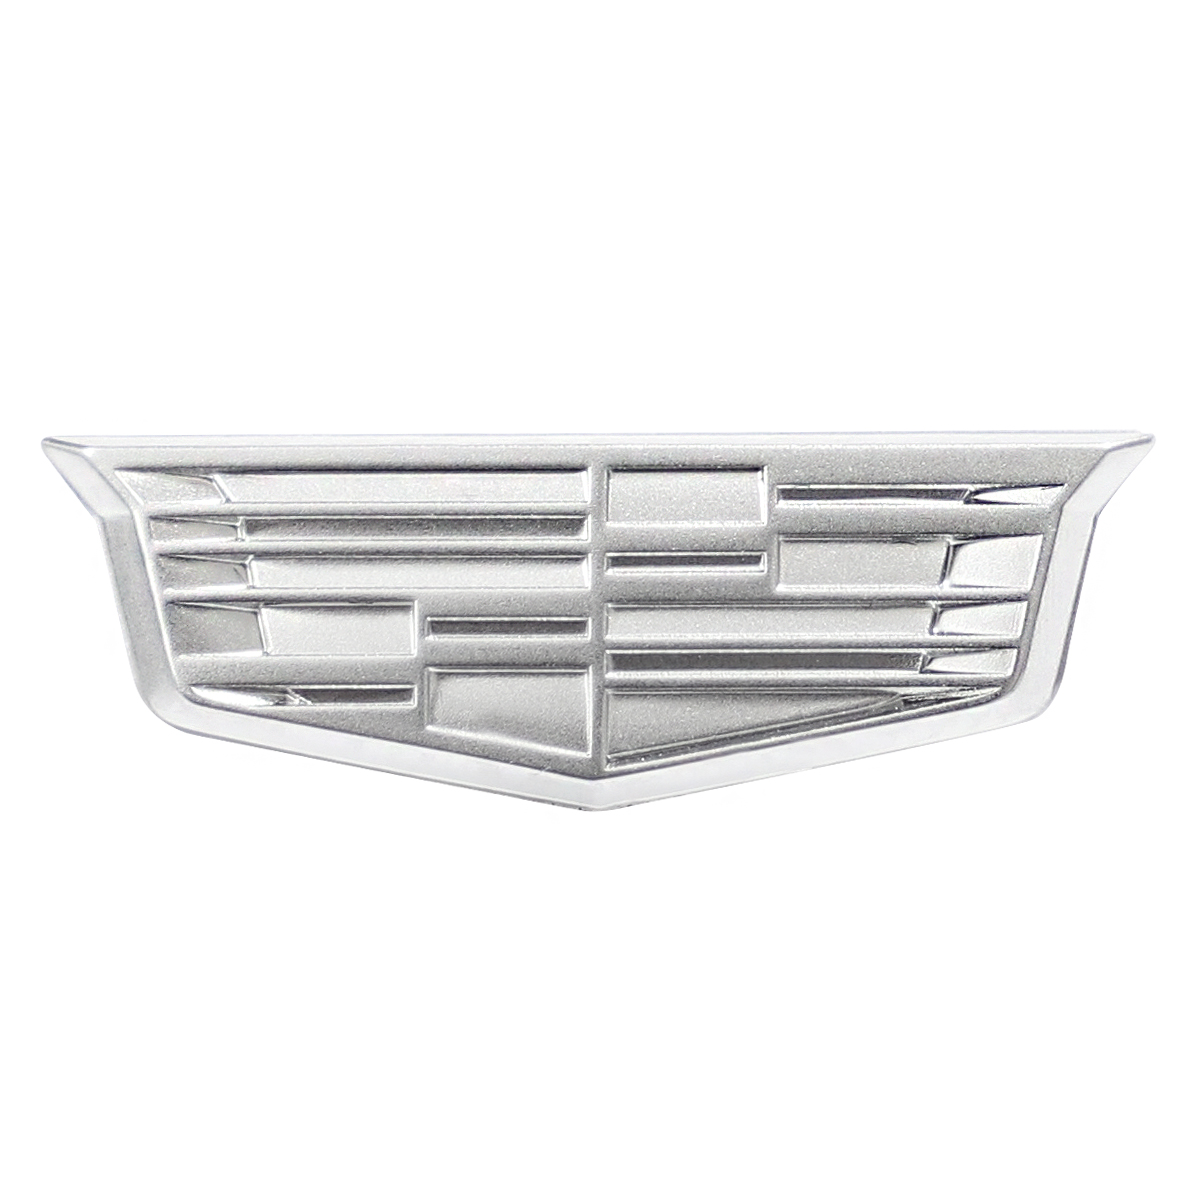 Cadillac Emblem Pin